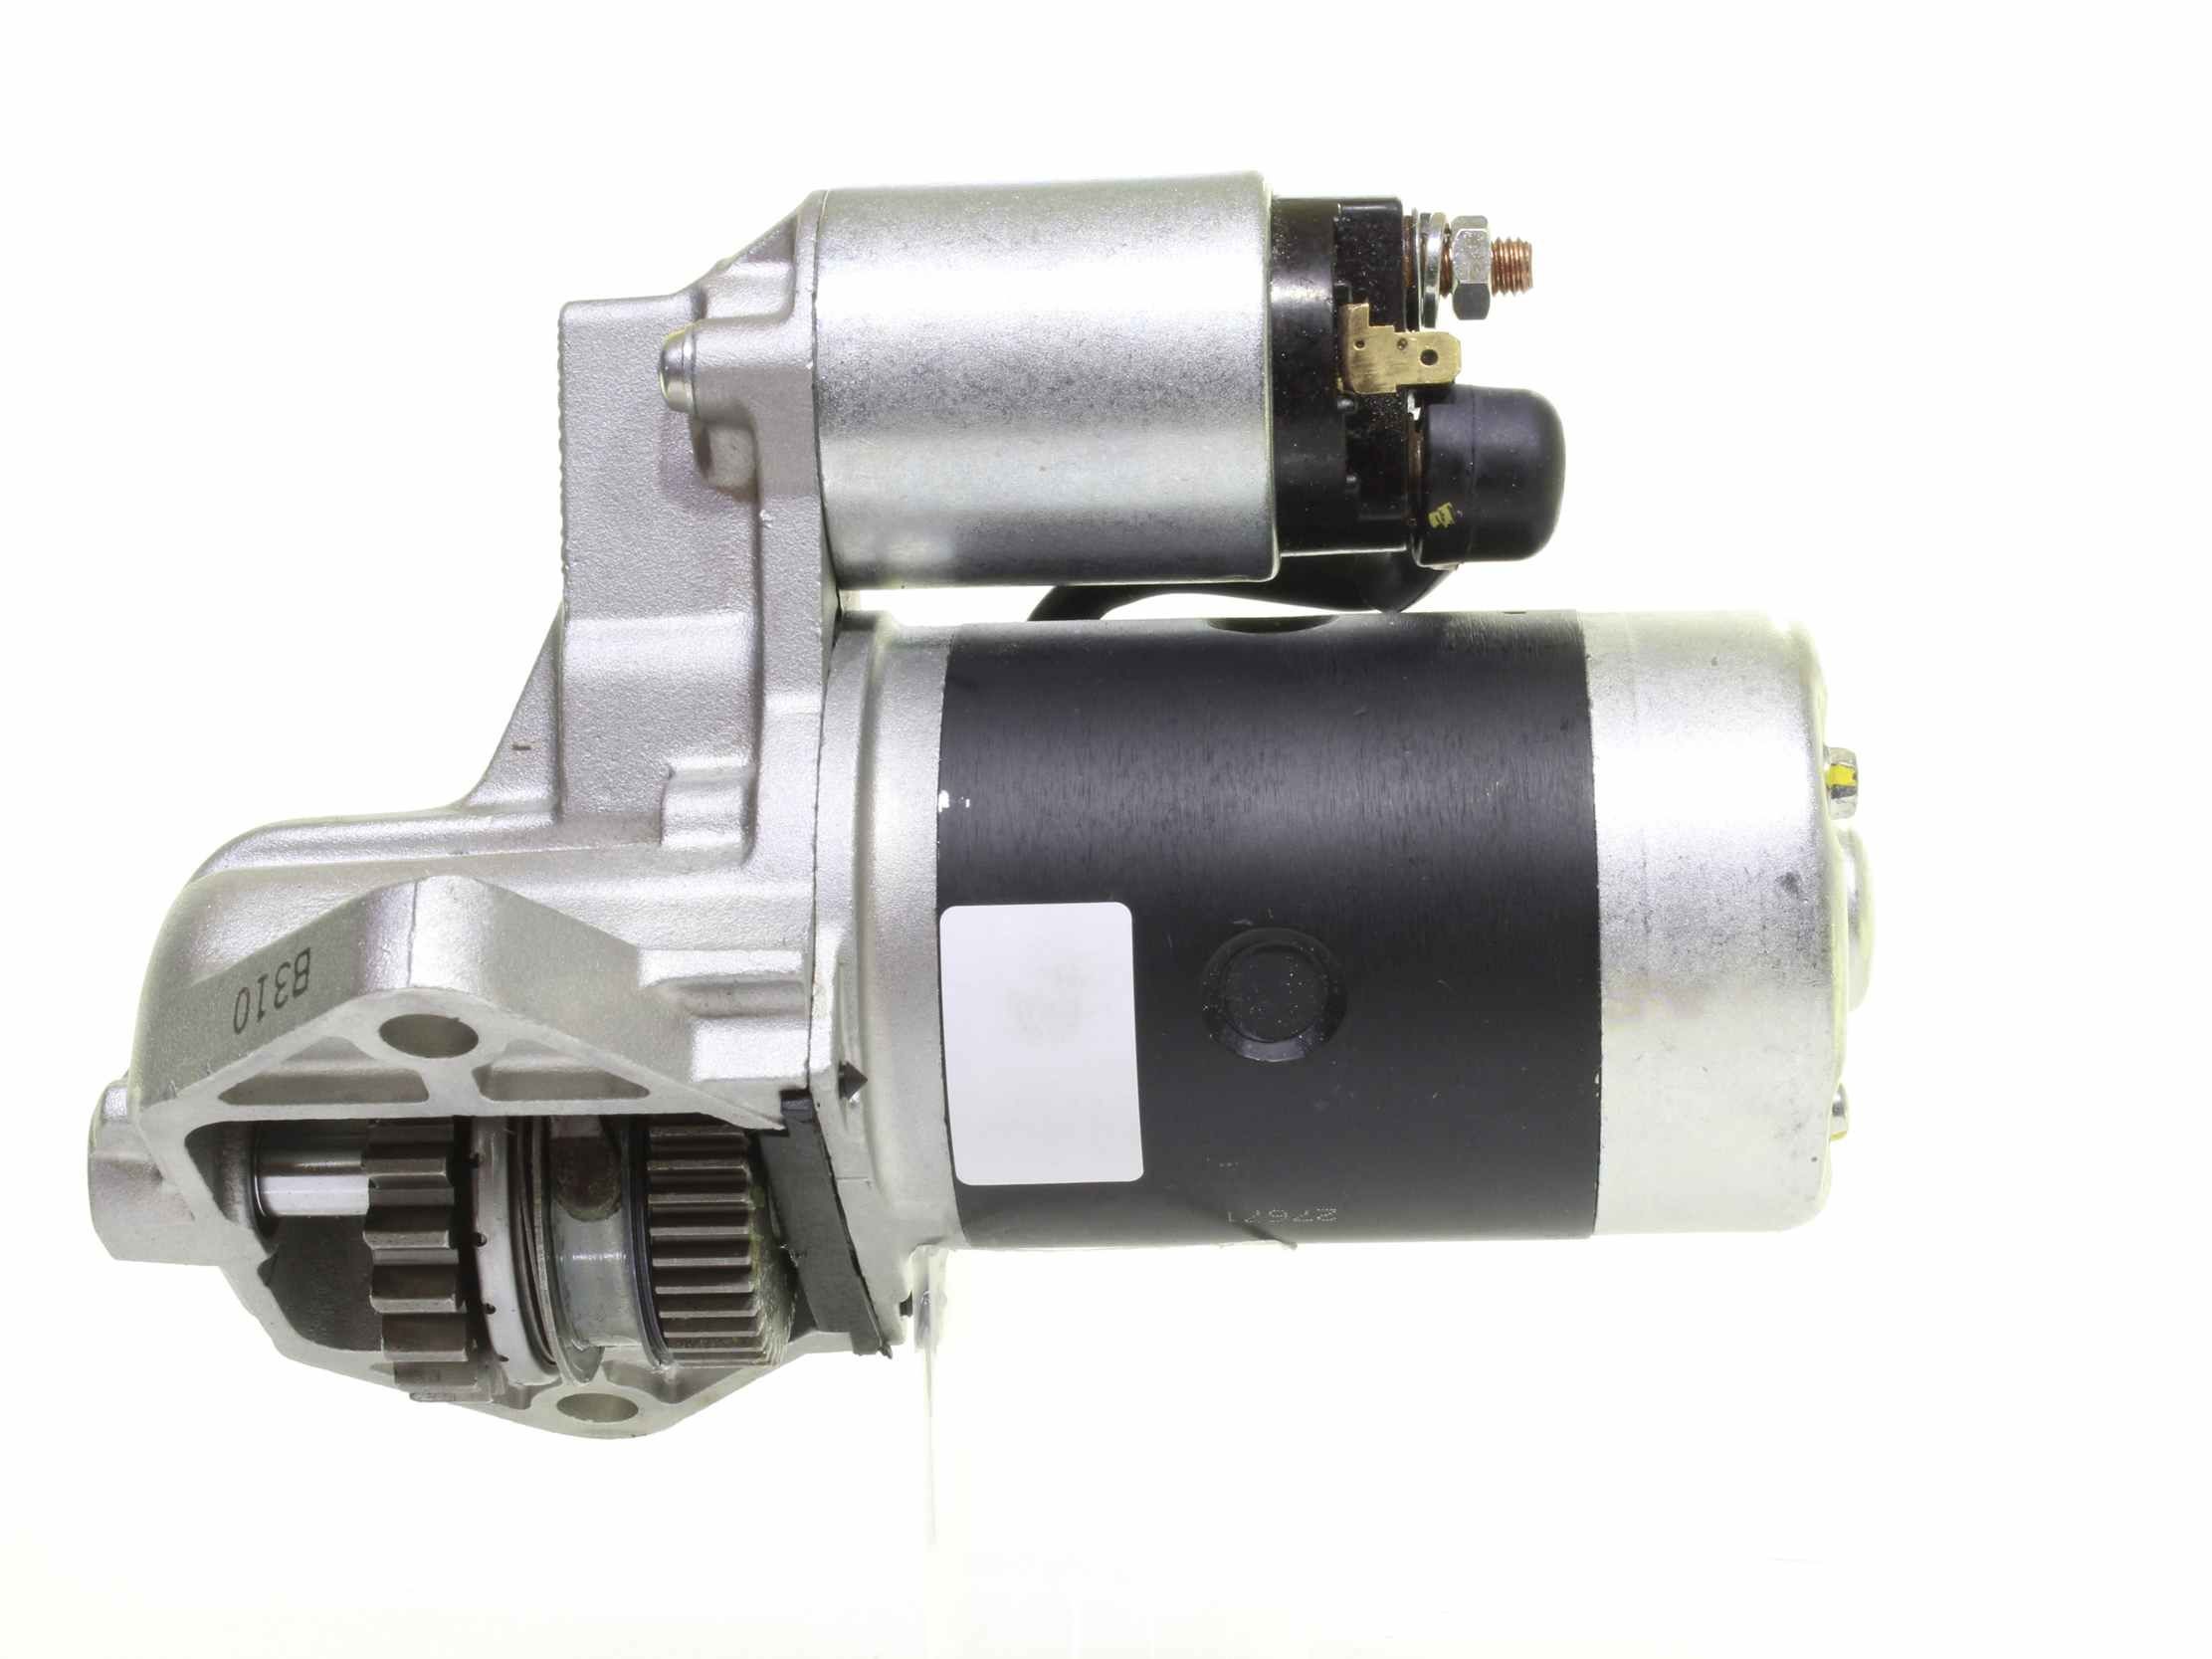 10441336 Engine starter motor ALANKO STR71009 review and test